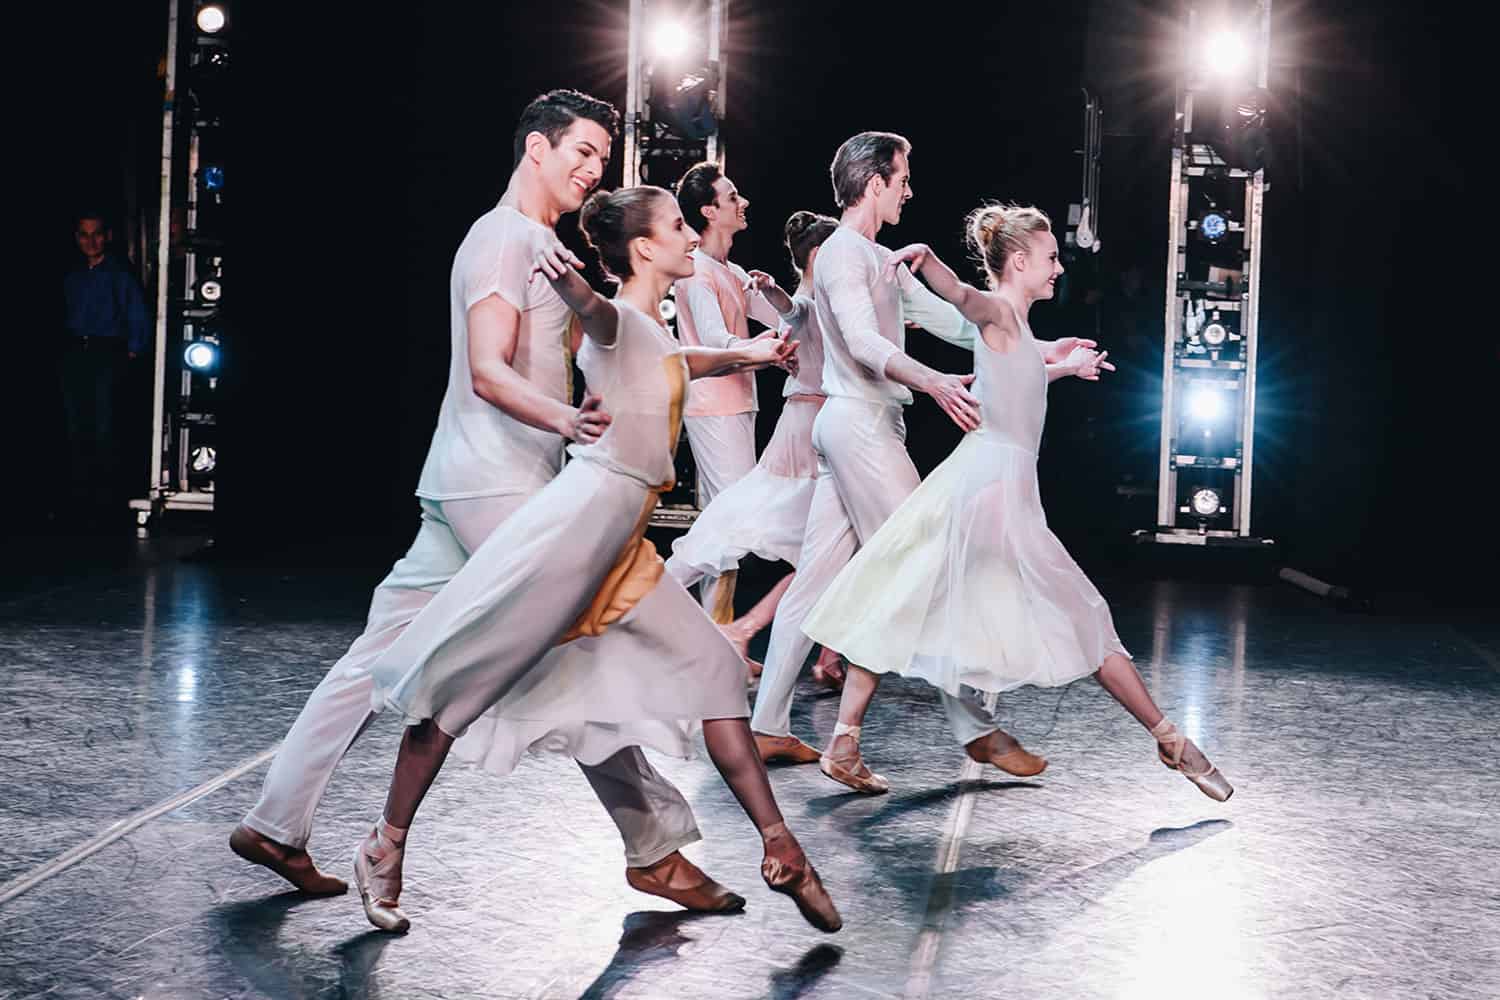 2022 New York City Ballet Spring Gala